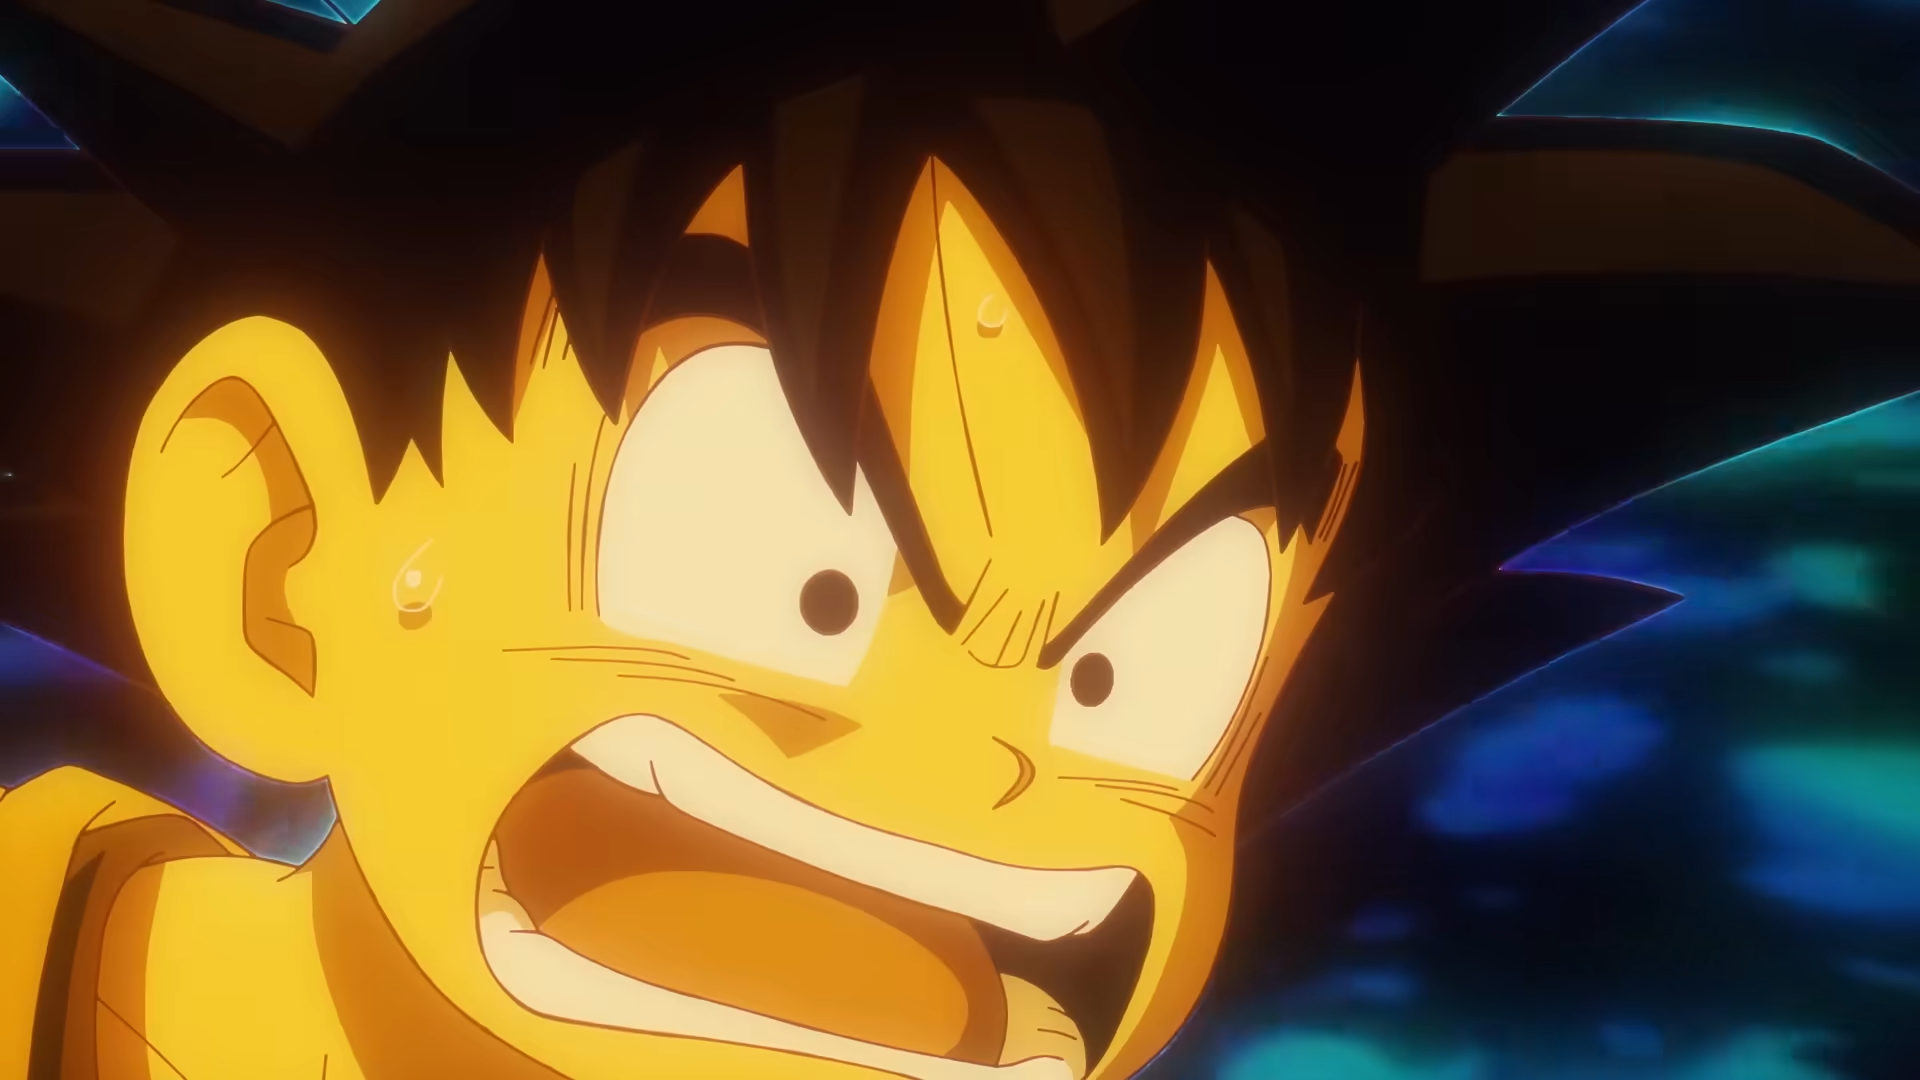 Dragon Ball DAIMA” Teaser Trailer / Fall 2024 : r/dbz